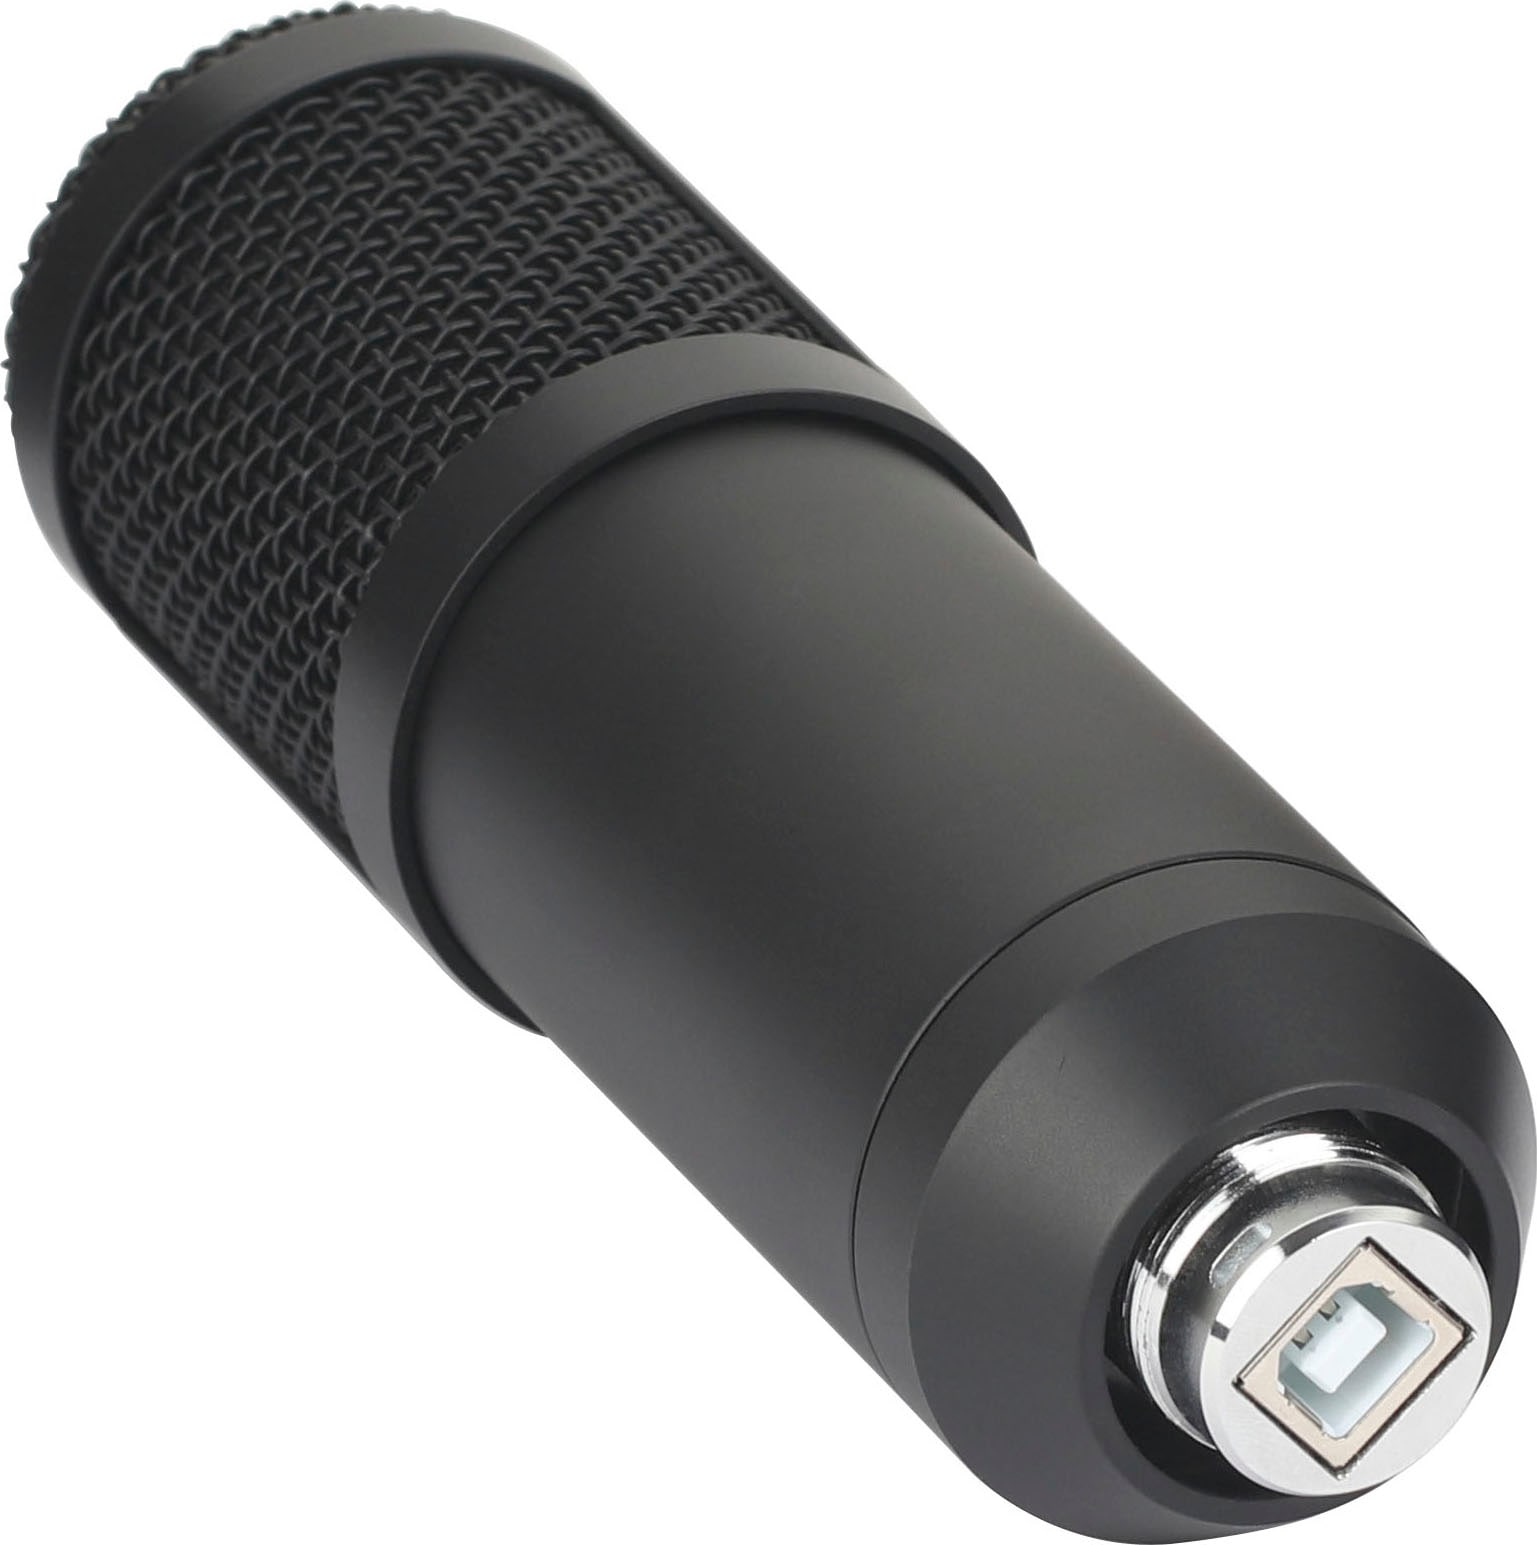 Hyrican Mikrofon »USB Streaming Mikrofon Set ST-SM50 mit Mikrofonarm,  Spinne & Popschutz« bei OTTO